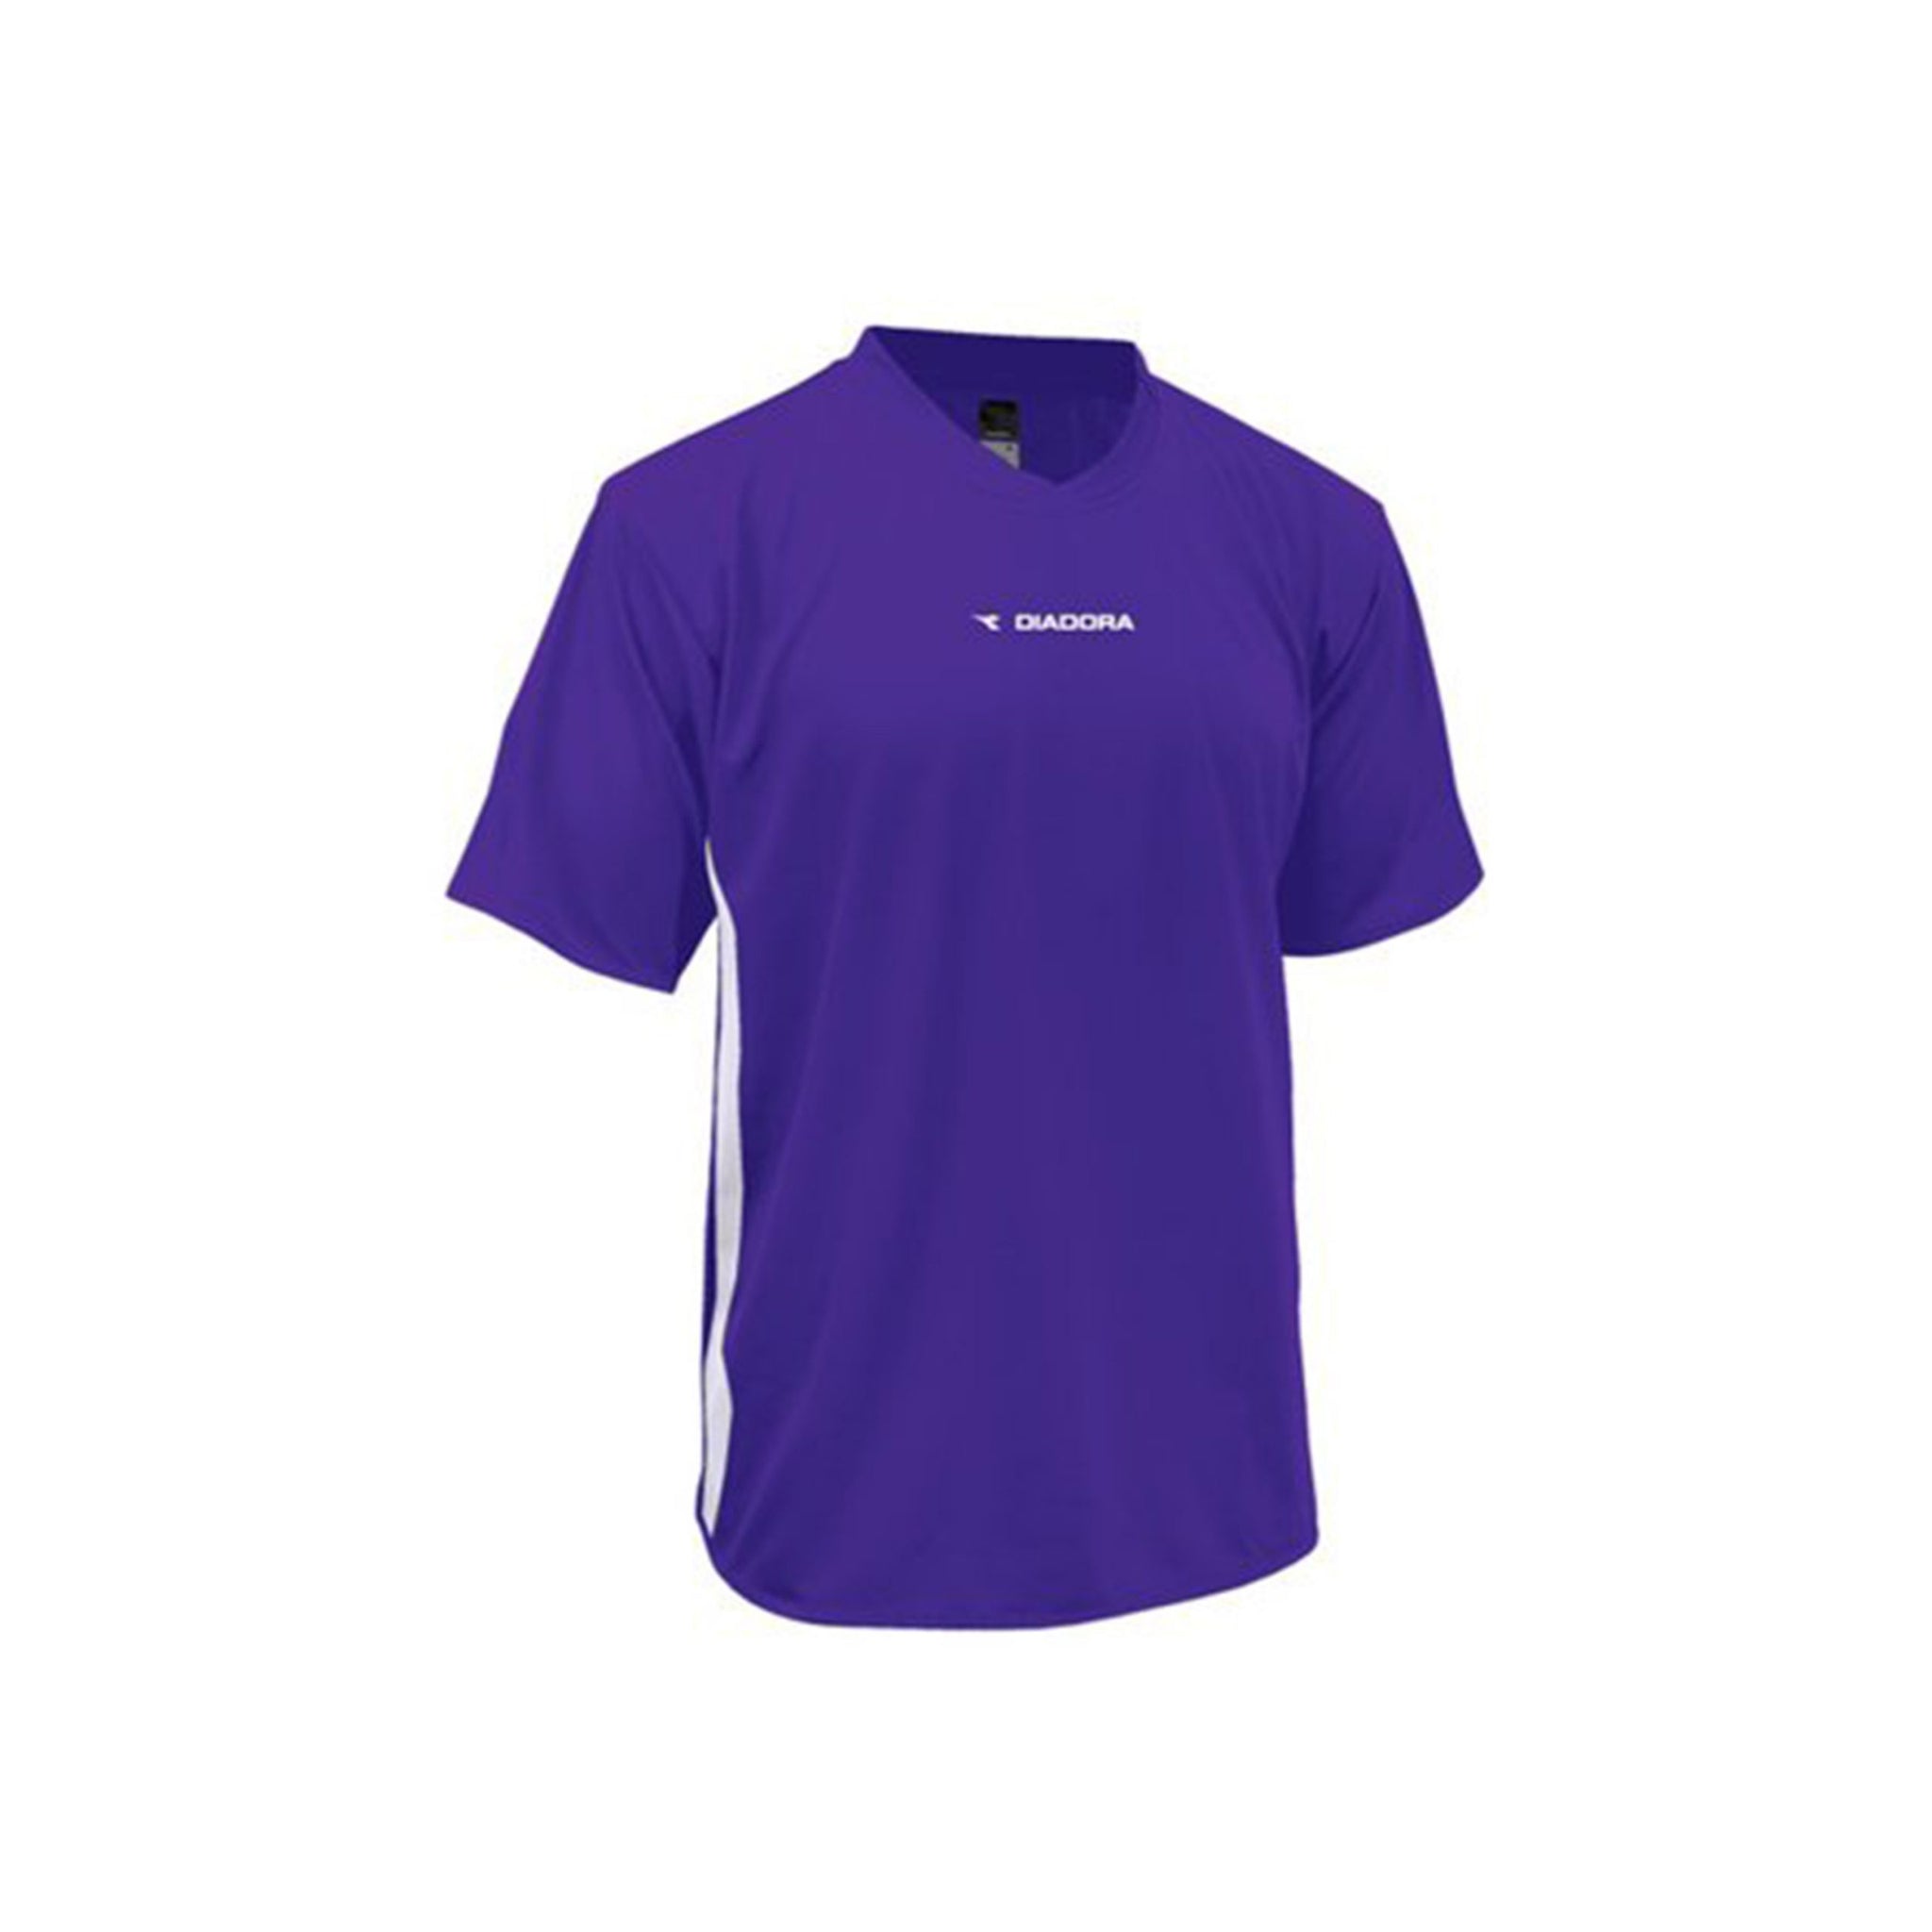 DIADORA Calcio Jersey (Purple)